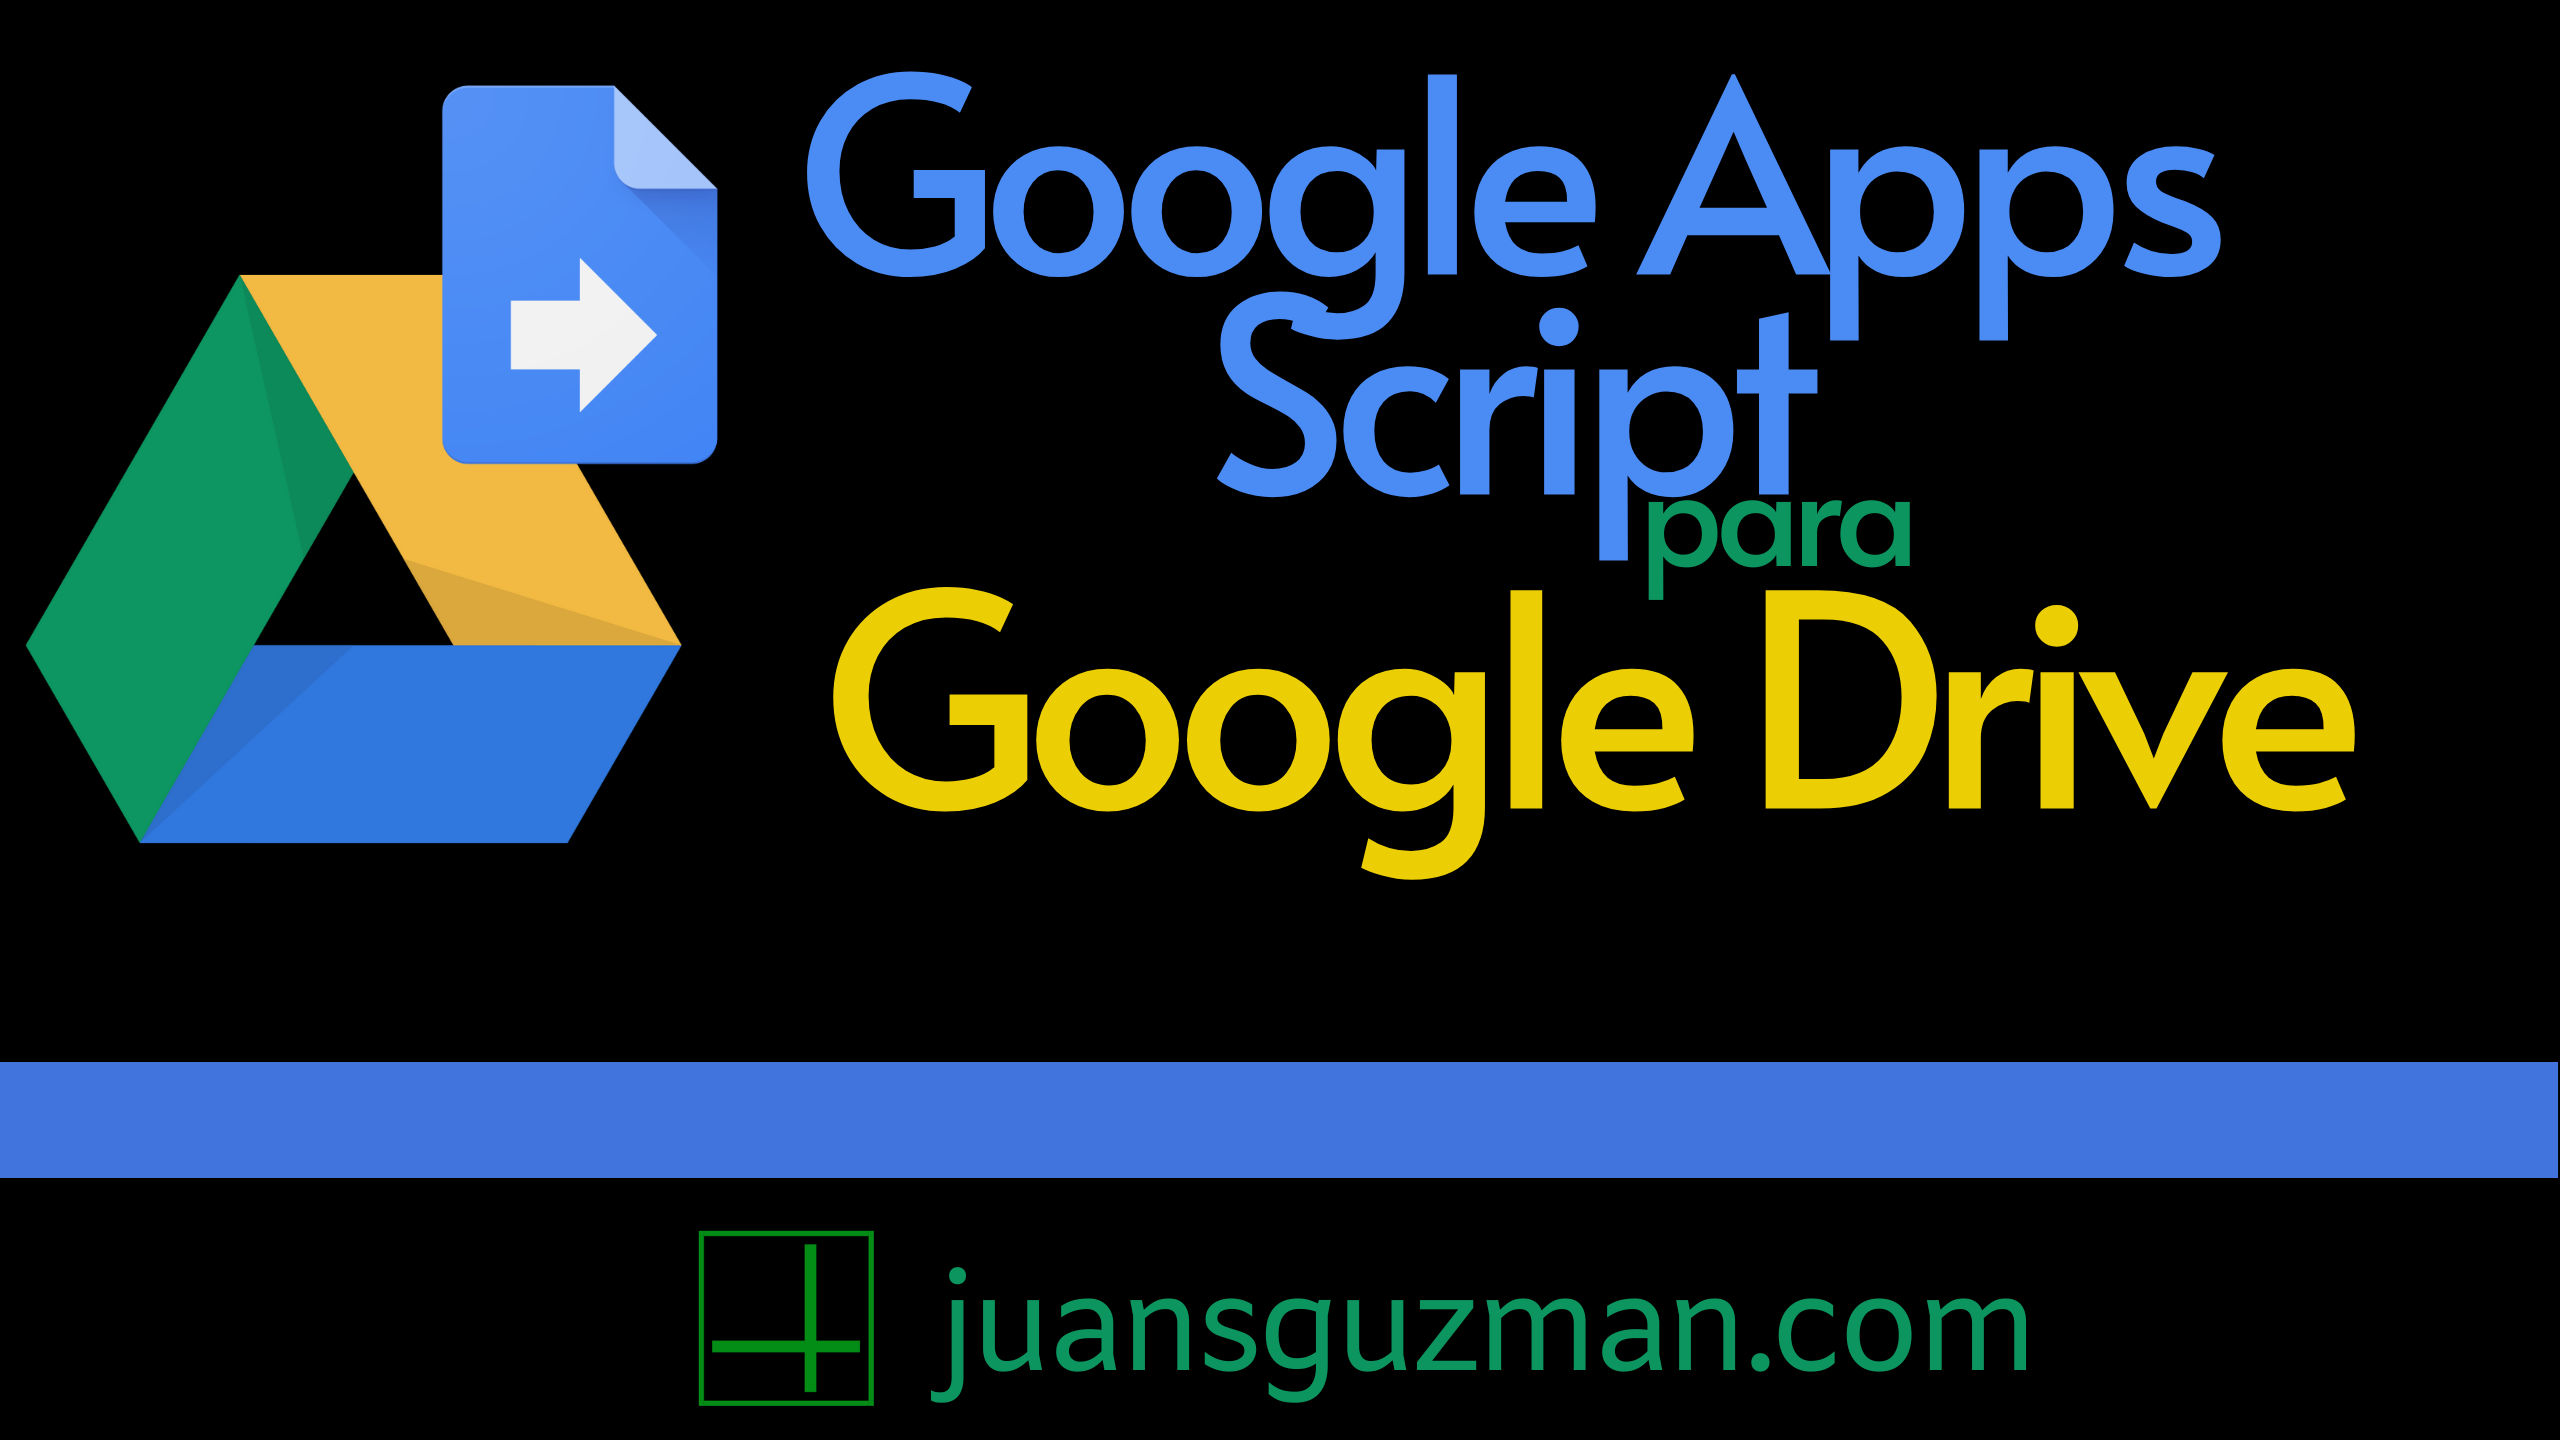 Google Apps Script para Google Drive